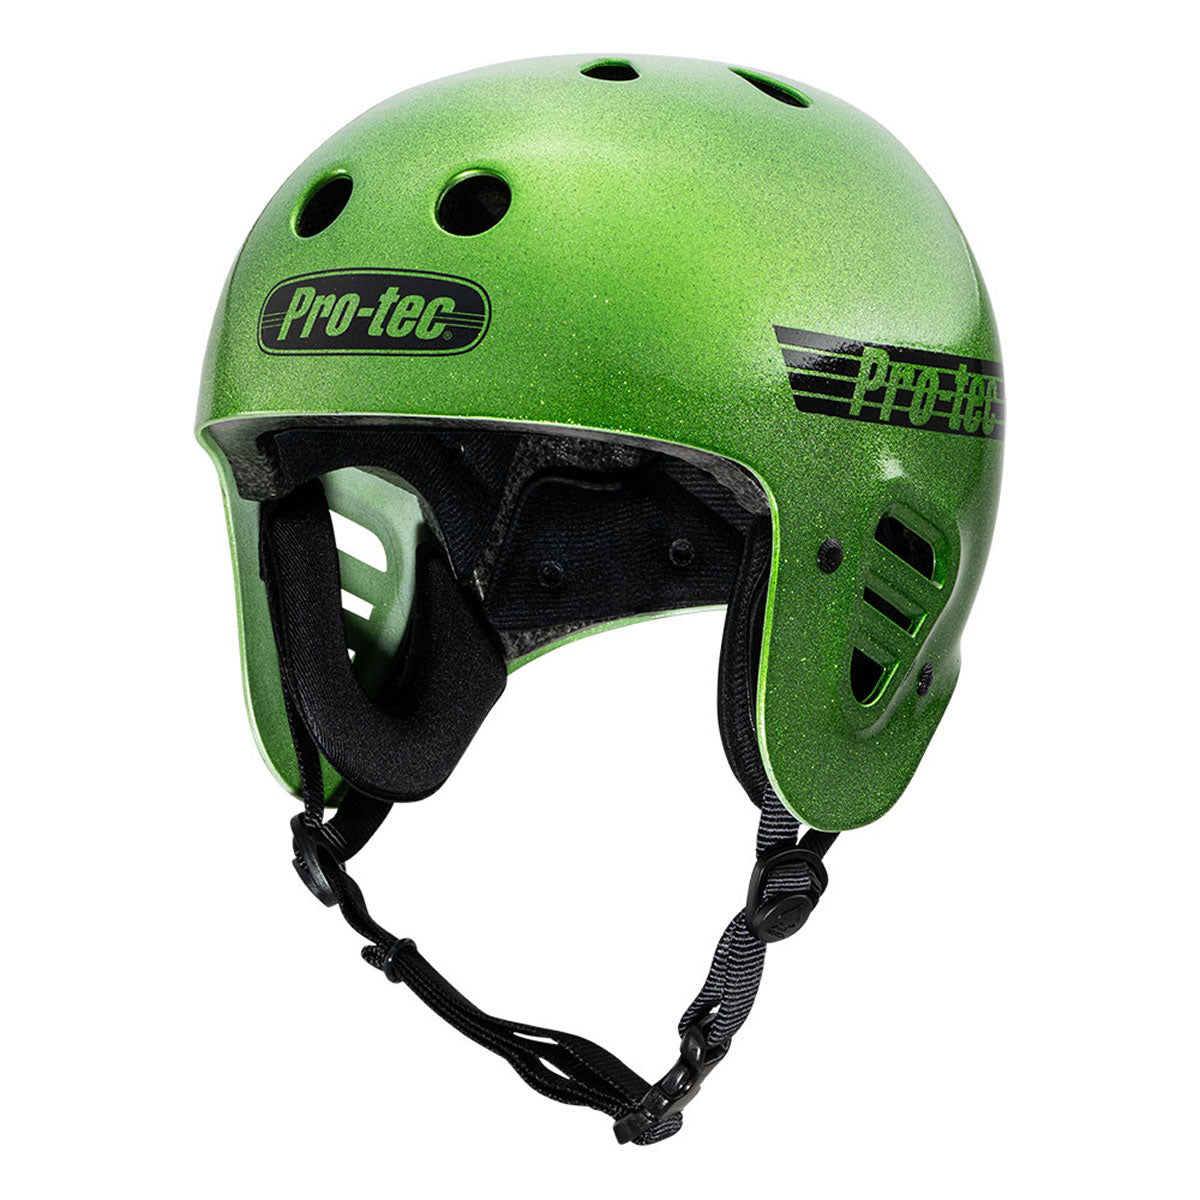 Pro-Tec Full Cut Certified Helmet - Candy Green Flake image 1